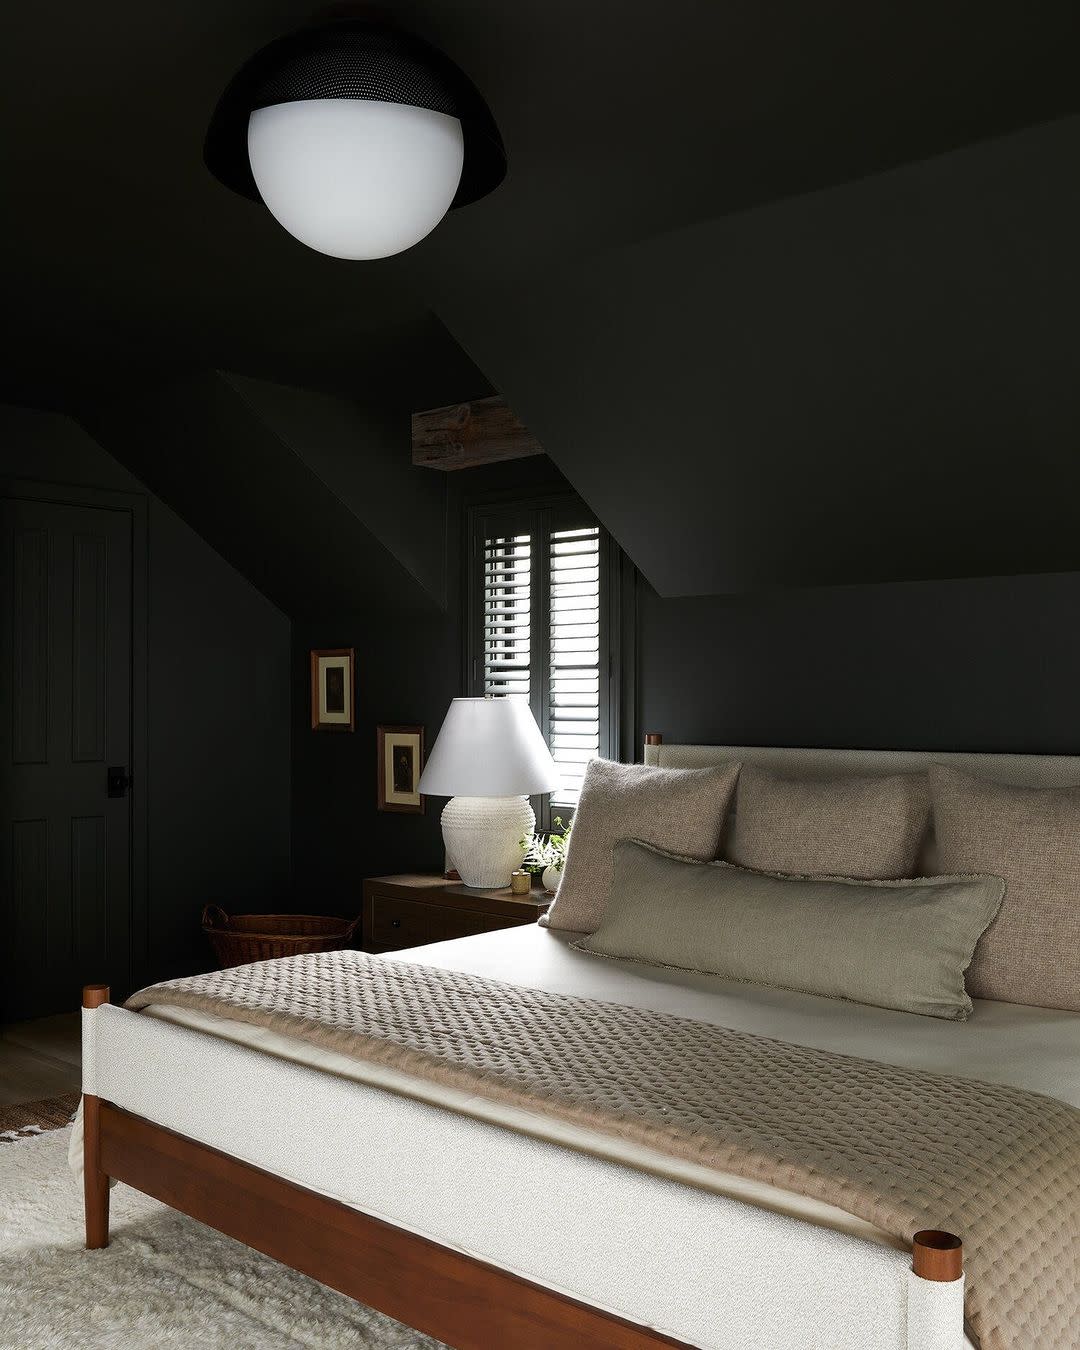  Dark black bedroom with white bed. 